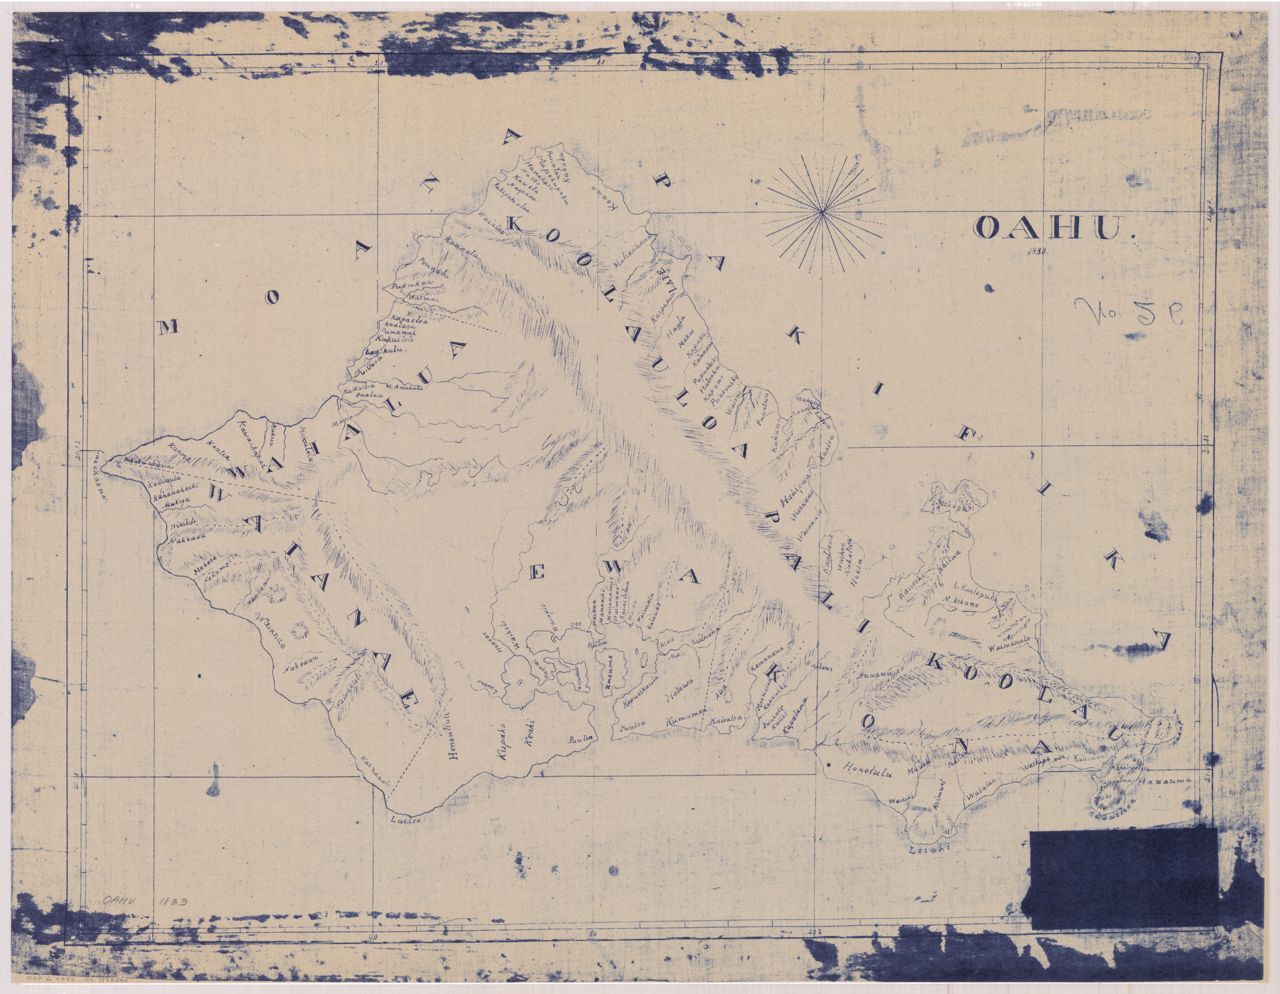 1833 Oahu (place names)